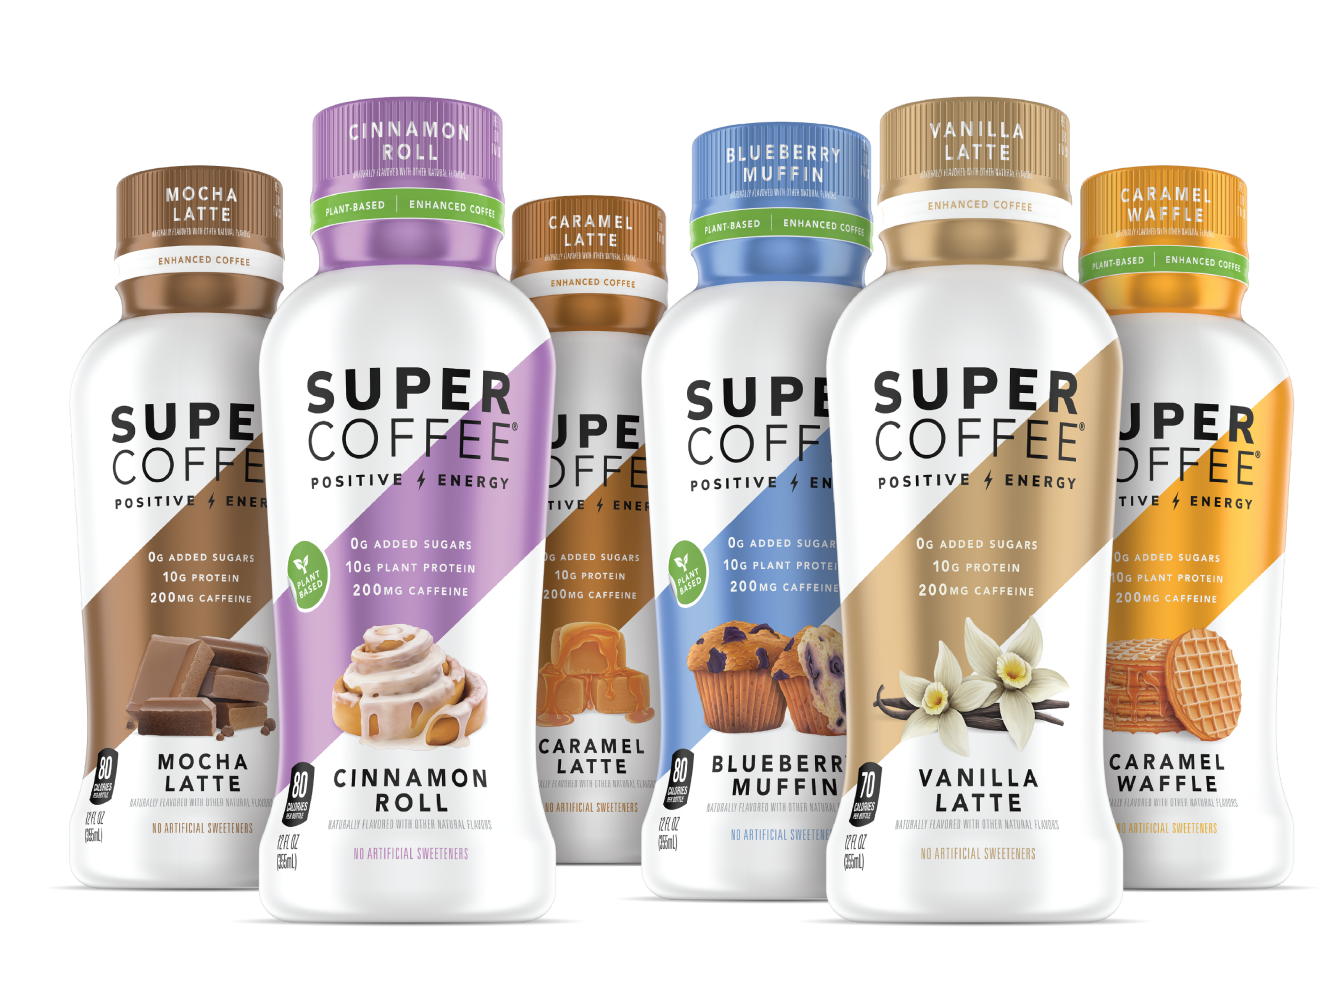 Super Coffee Rebate Aisle